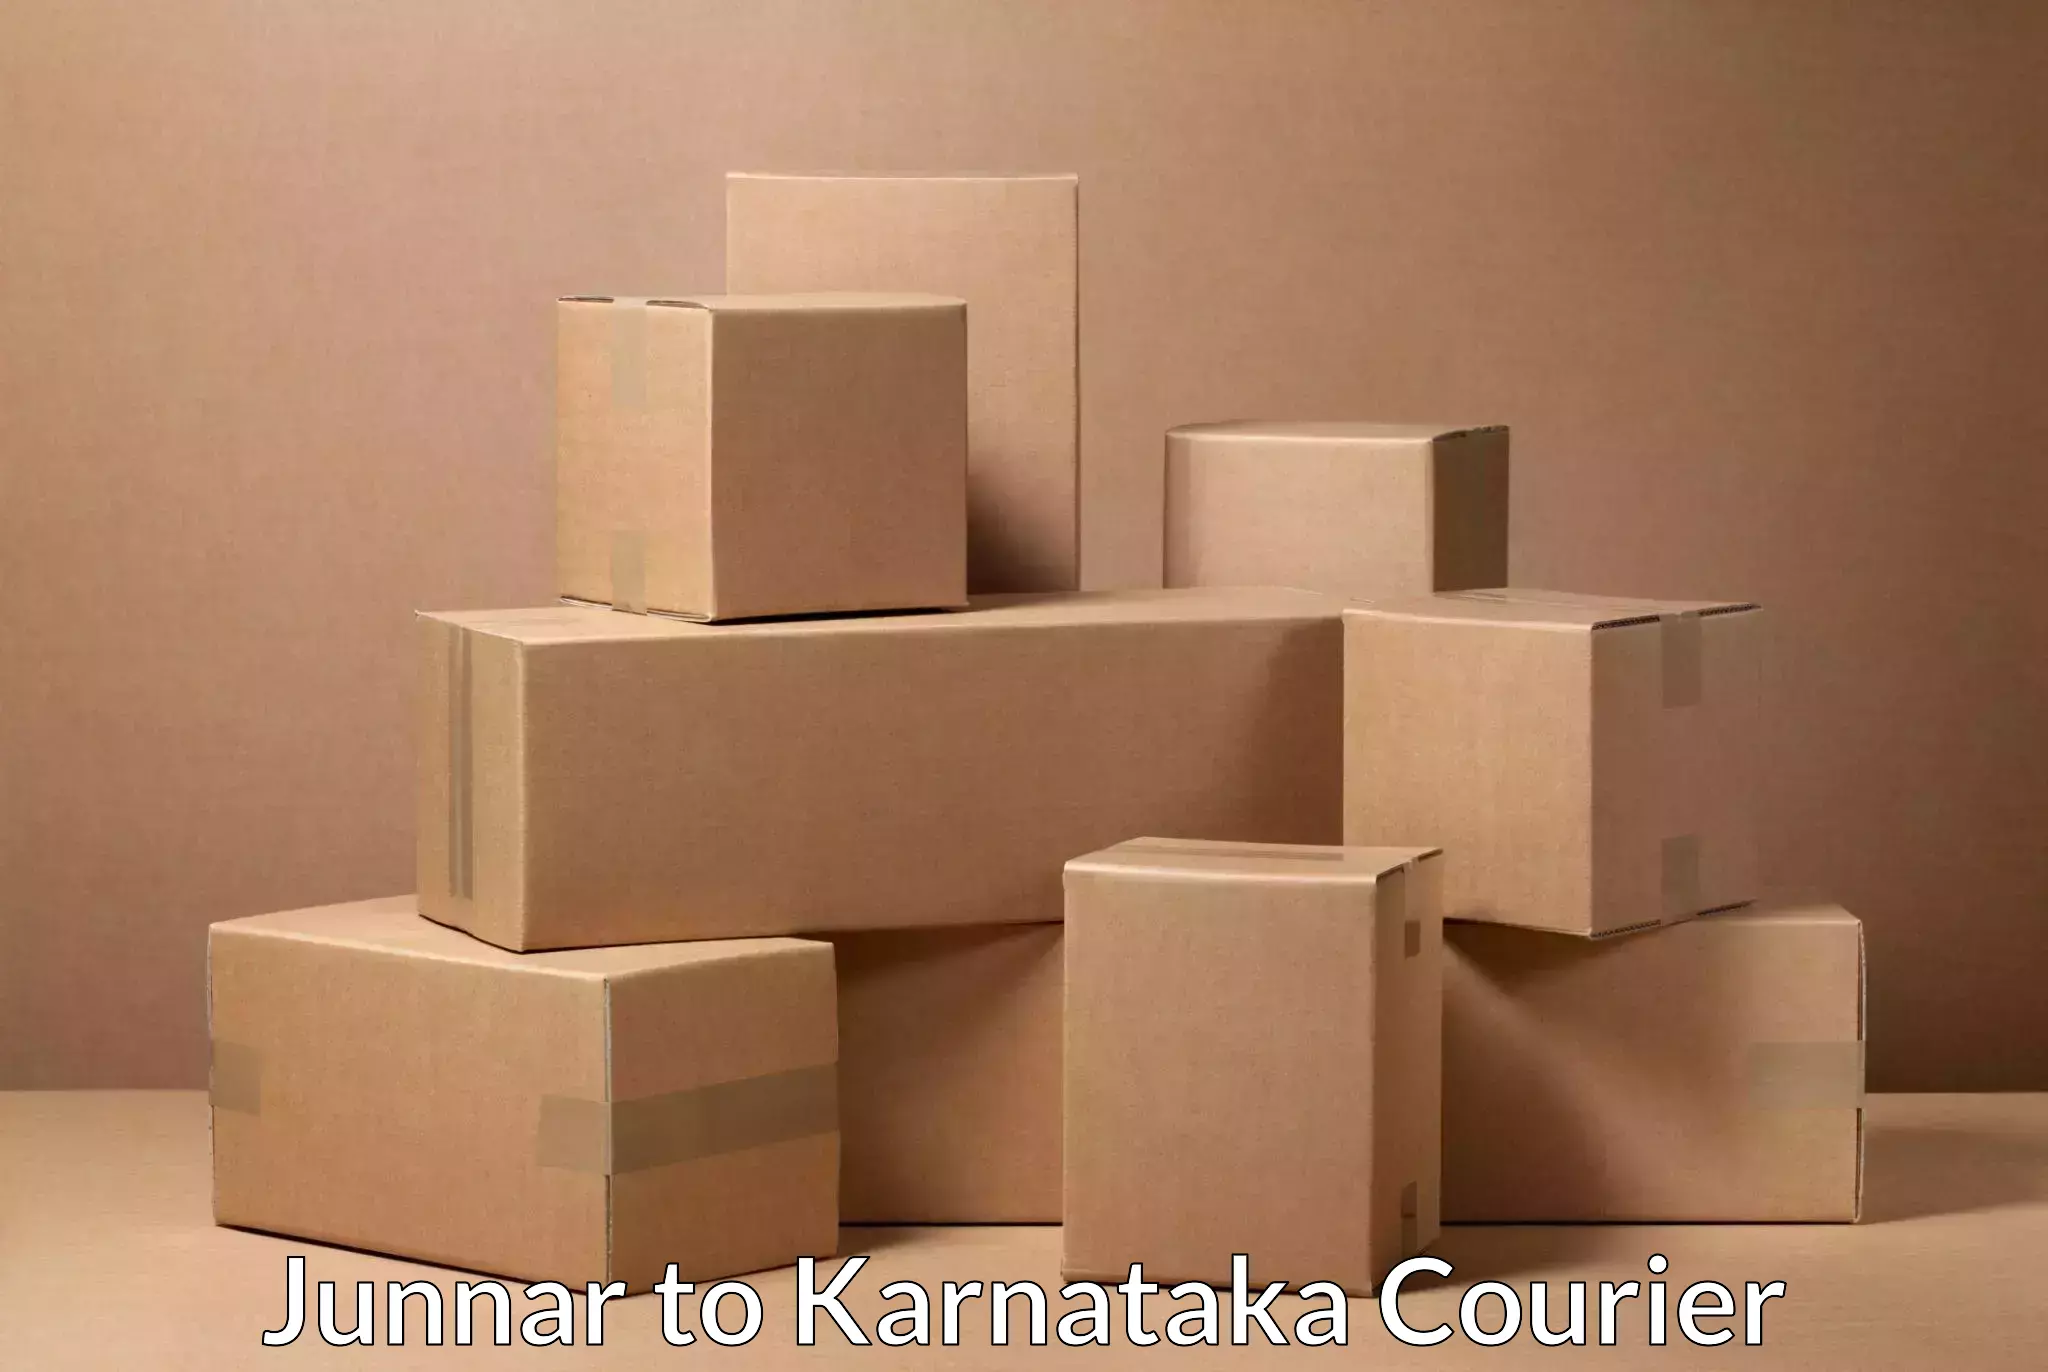 Express delivery network Junnar to Karnataka